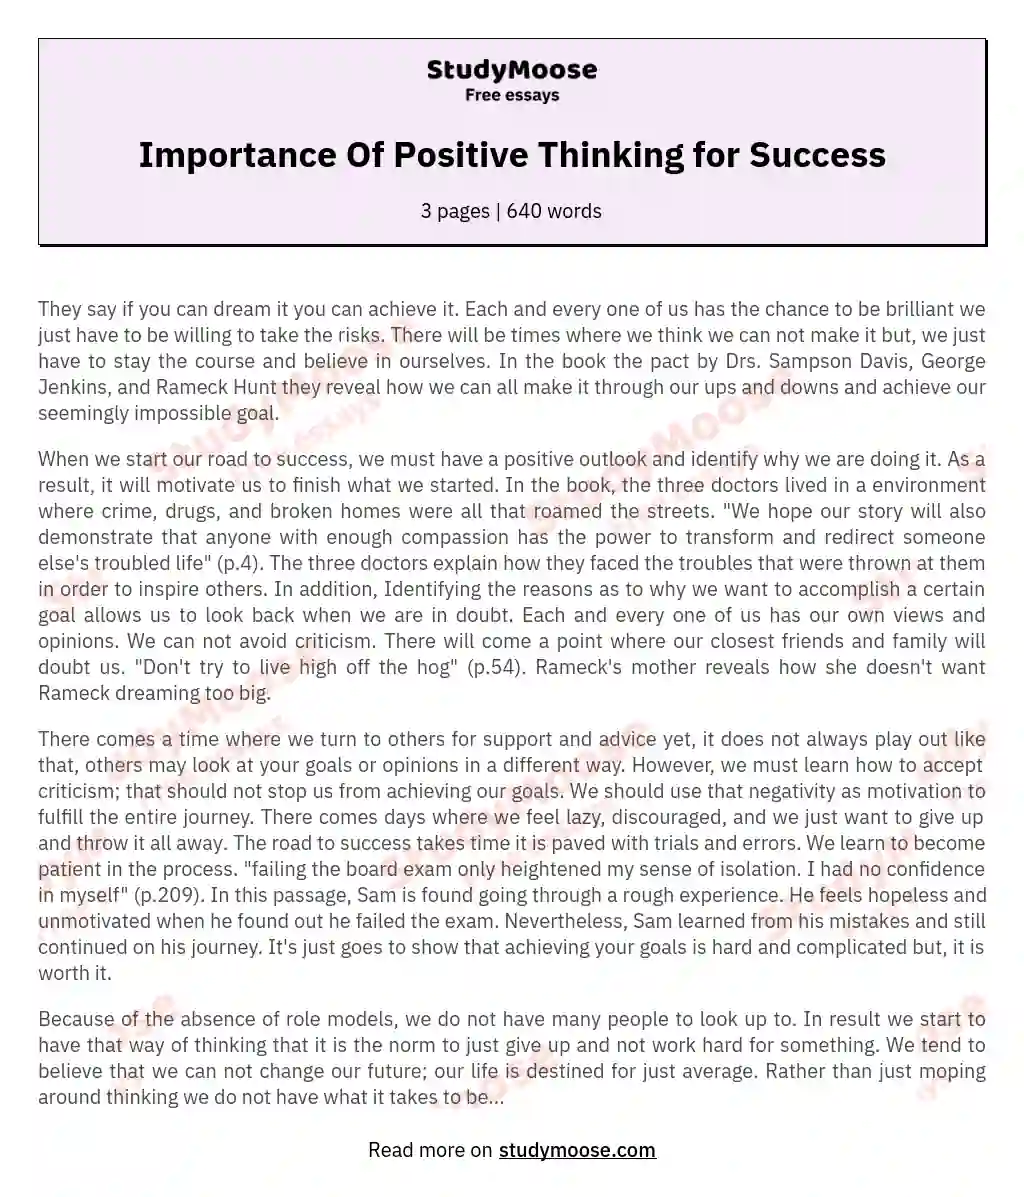 positive thinking speech 2 minutes